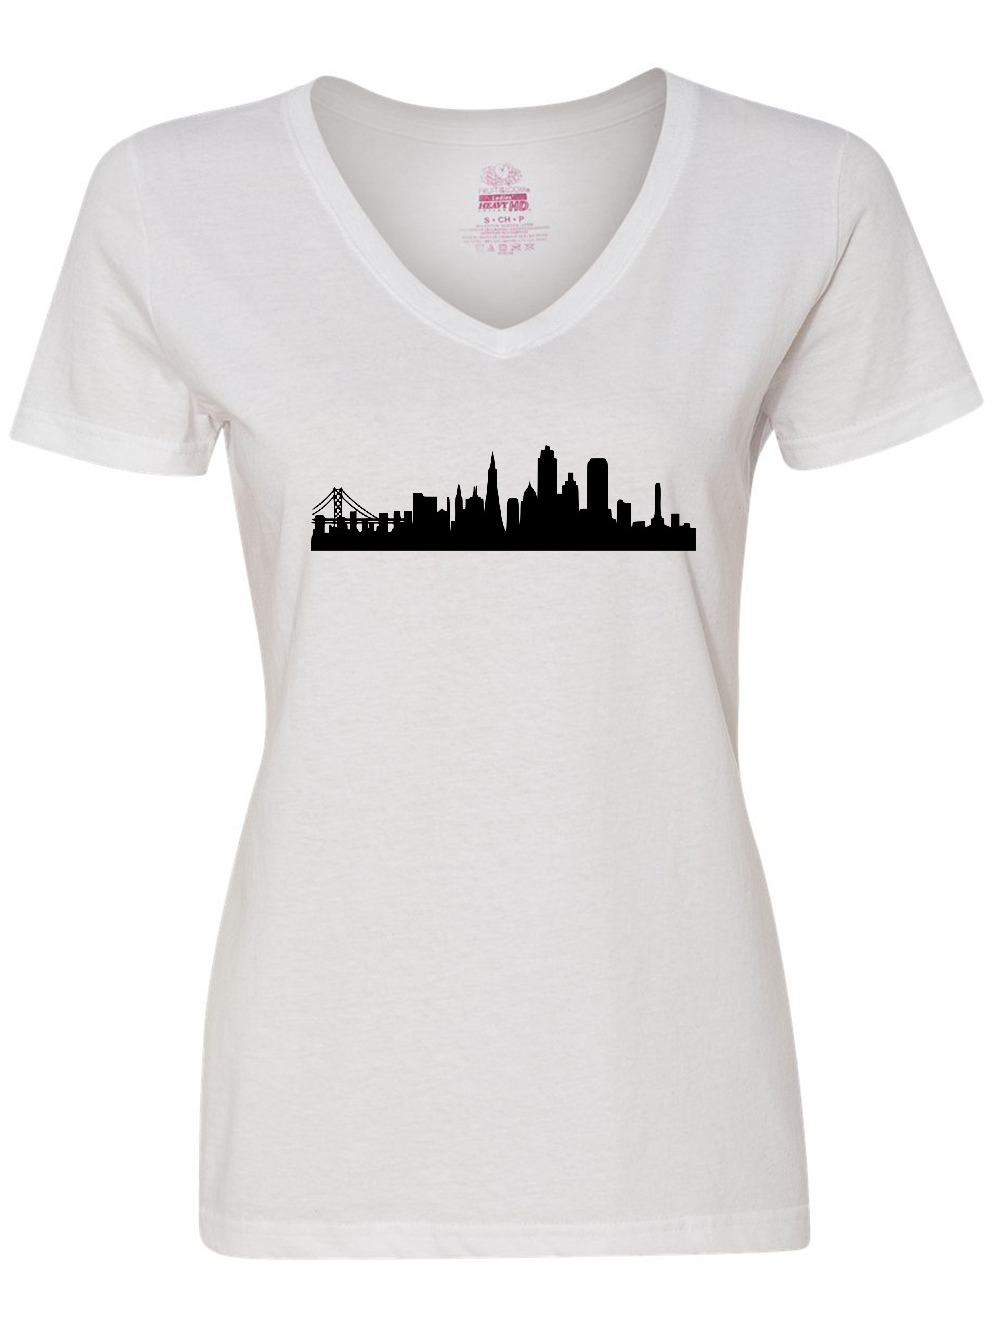 Inktastic San Francisco Skyline Women's V-Neck T-Shirt - image 1 of 4